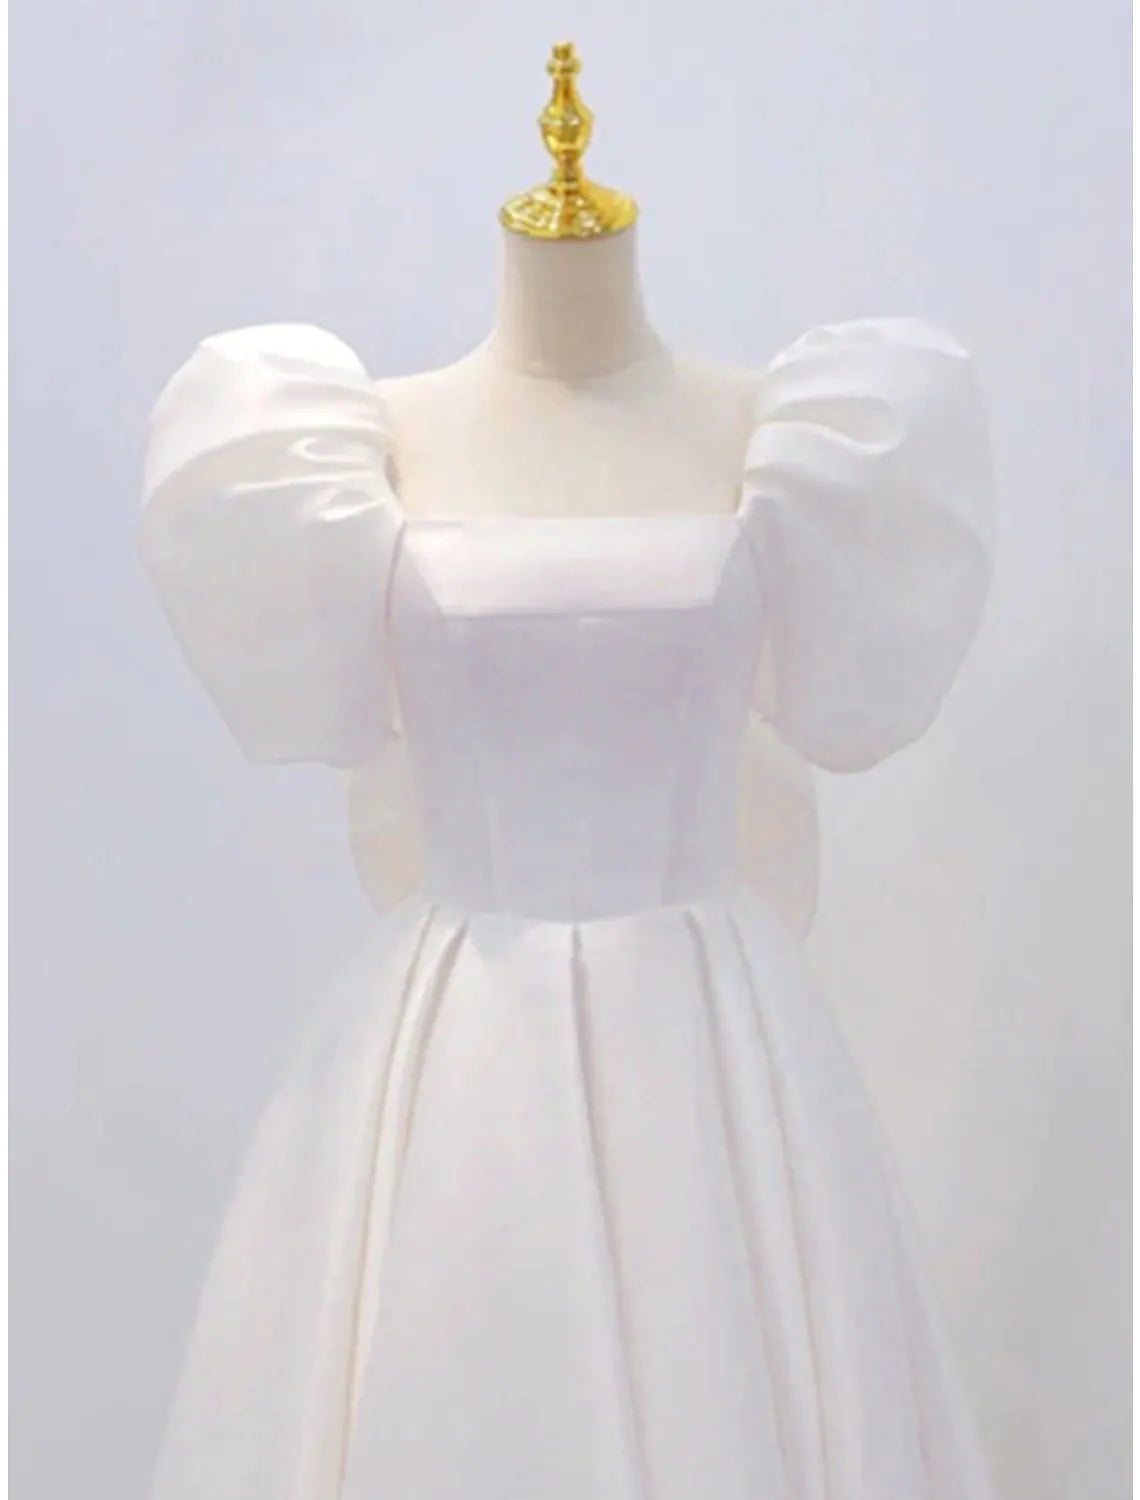 Bridal Little White Dresses Wedding Dresses Knee Length A-Line Short Sleeve Square Neck Satin